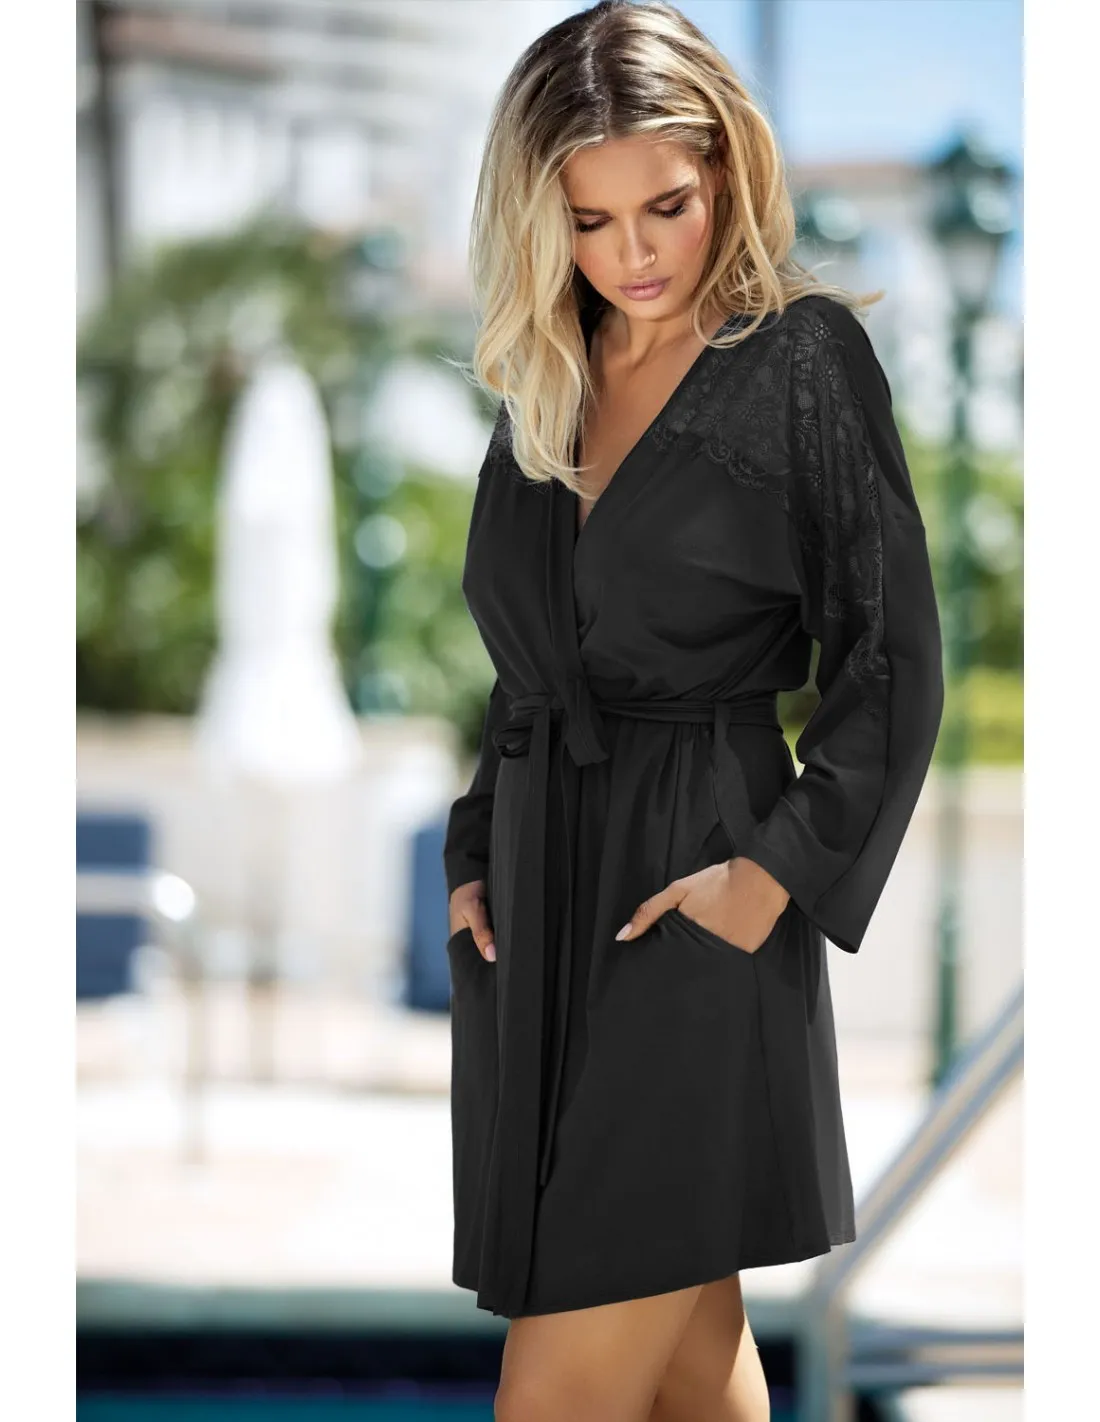 Wholesale of women's clothing - LivCo Corsetti Lingerie Brand